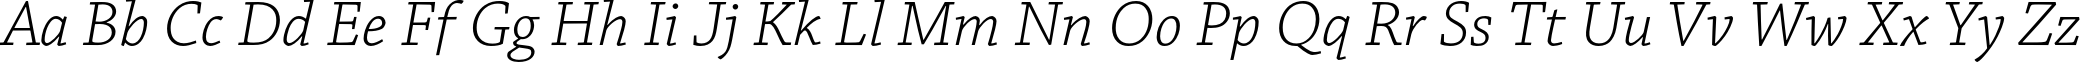 Пример написания английского алфавита шрифтом Chaparral Pro Light Italic